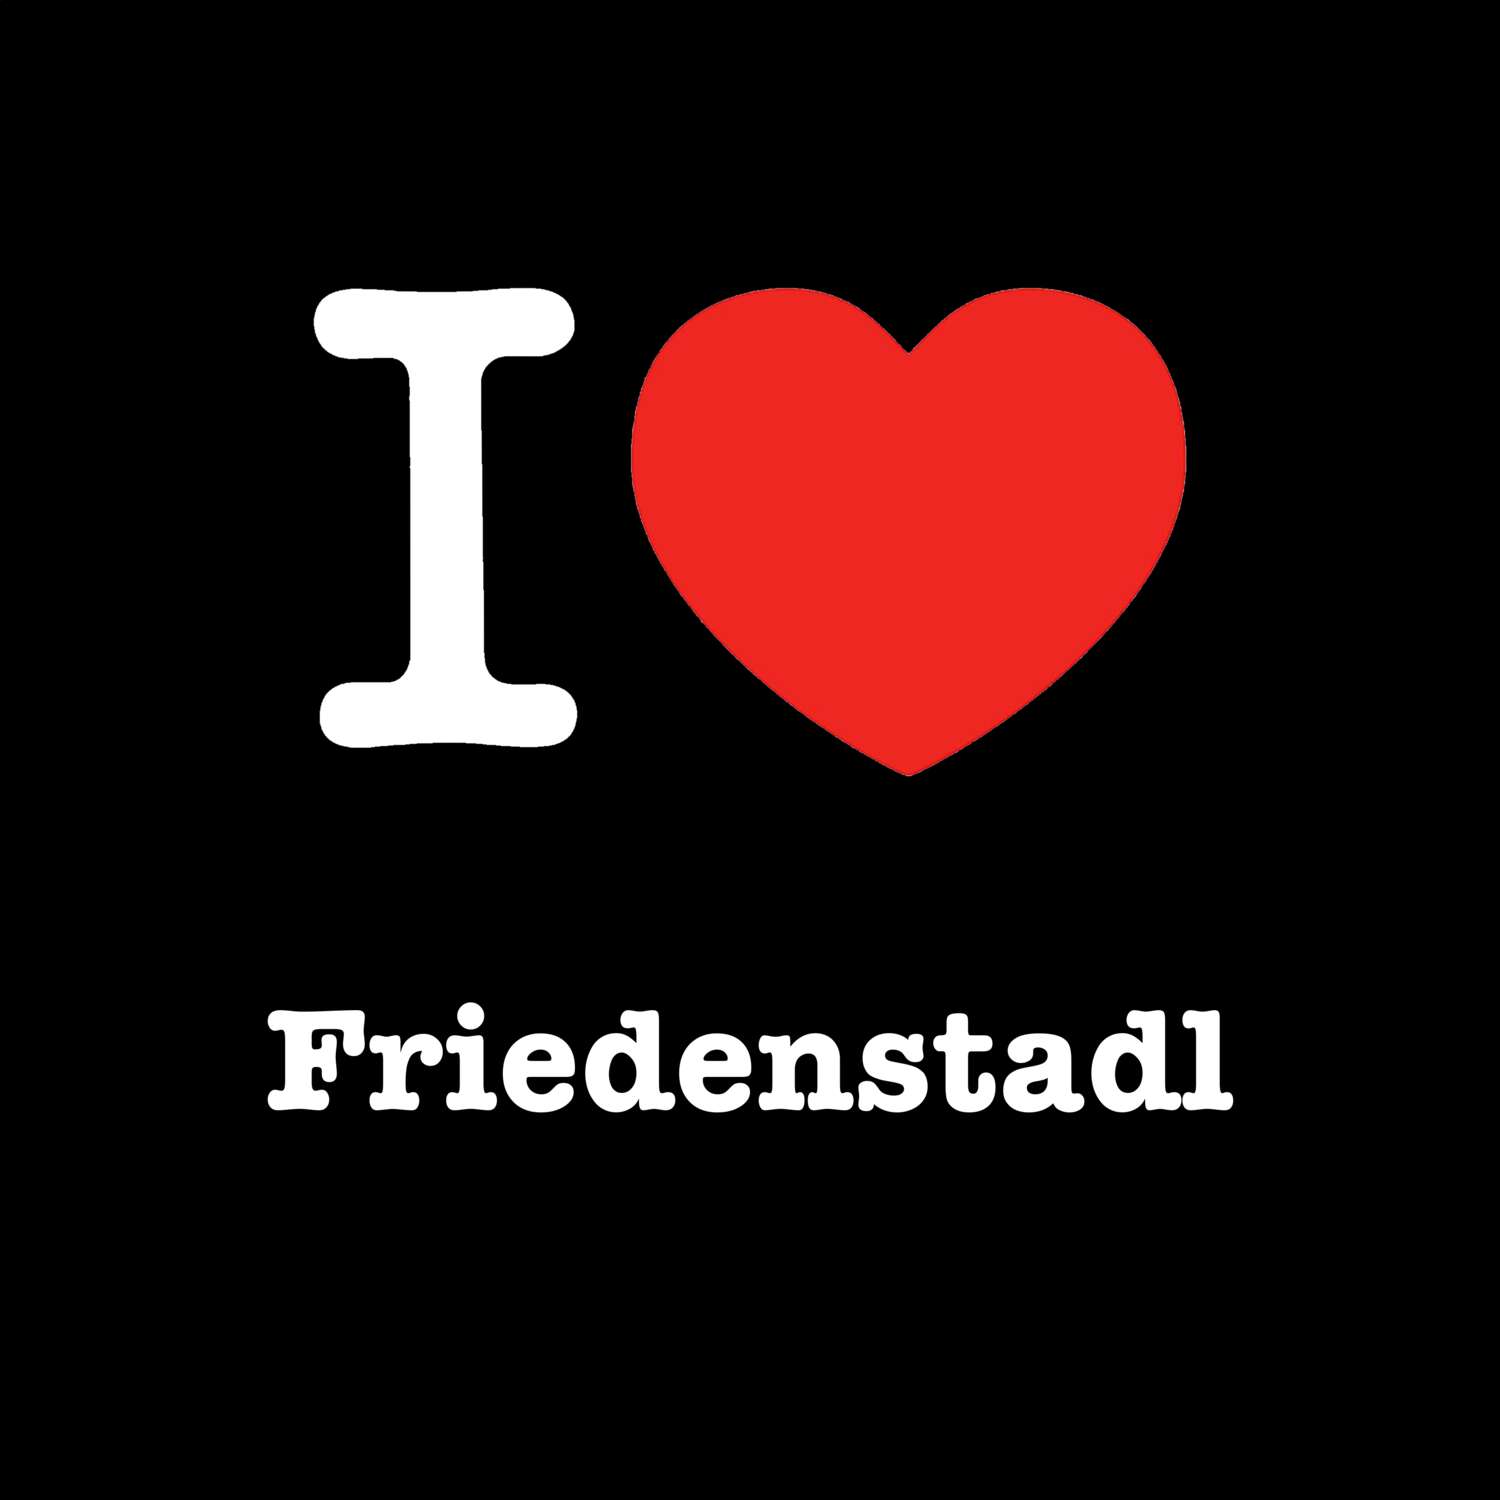 Friedenstadl T-Shirt »I love«